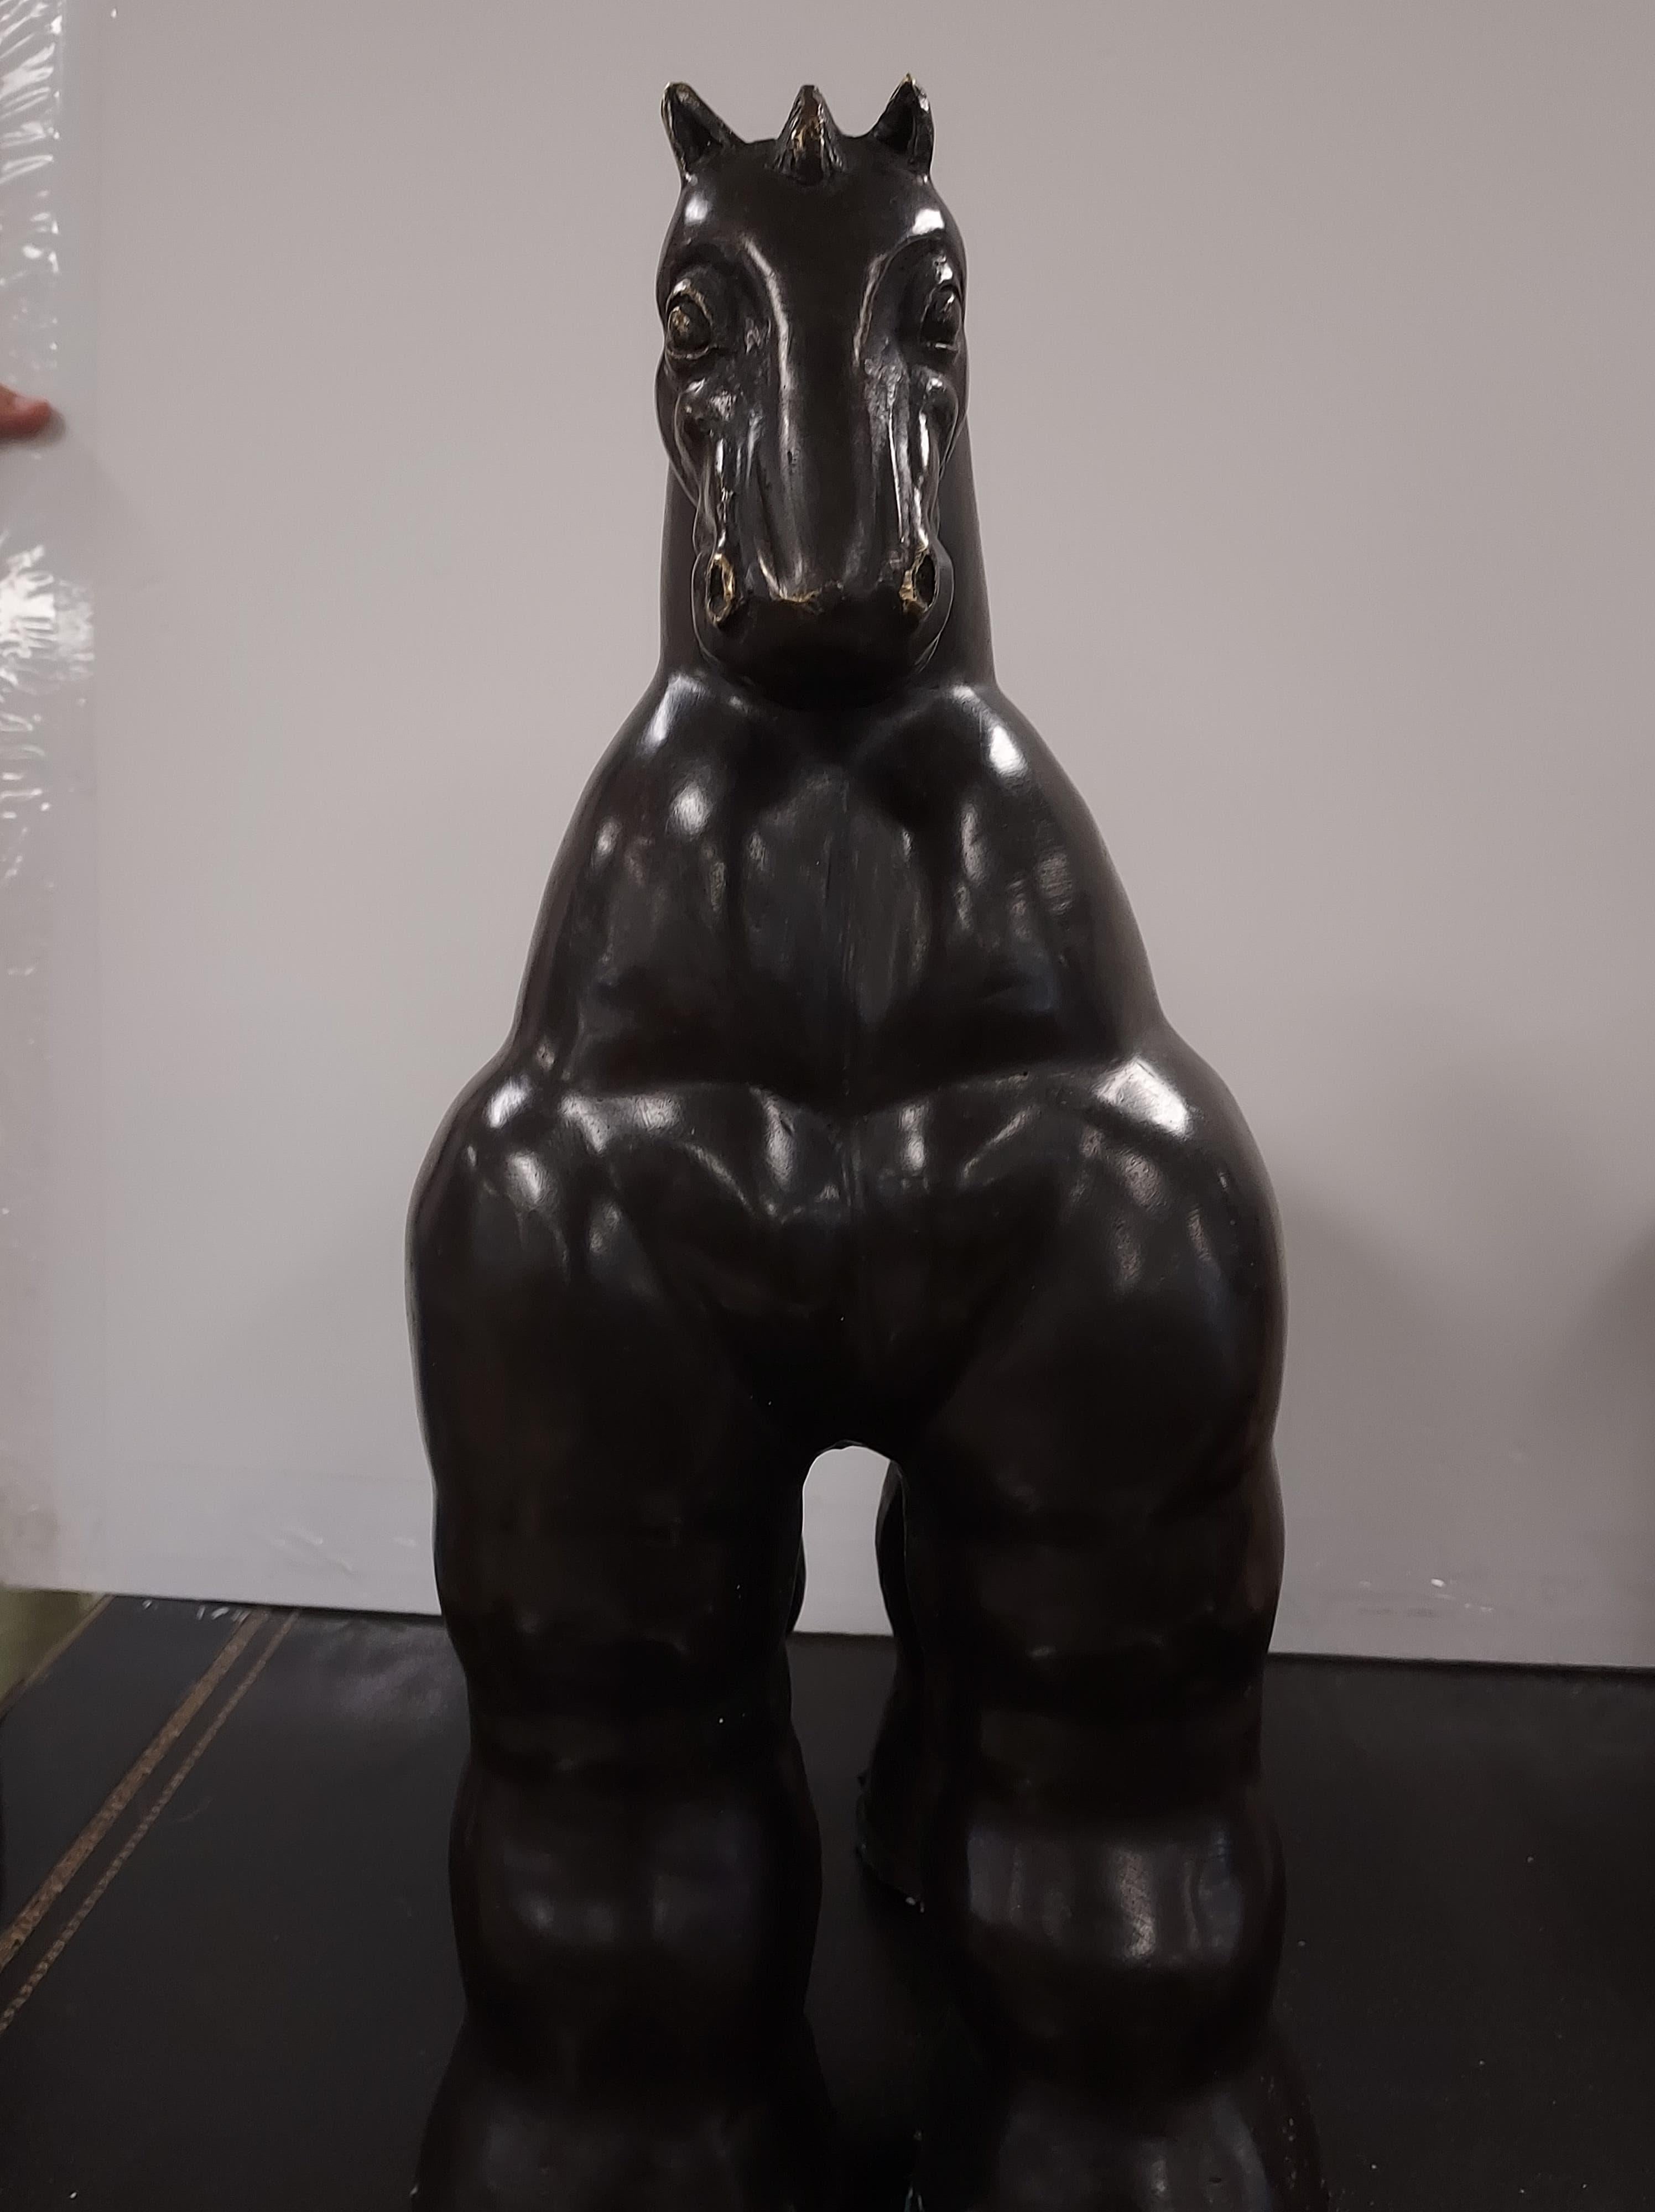 The Big Horse by Botero  - Contemporary Sculpture by Fernando Botero